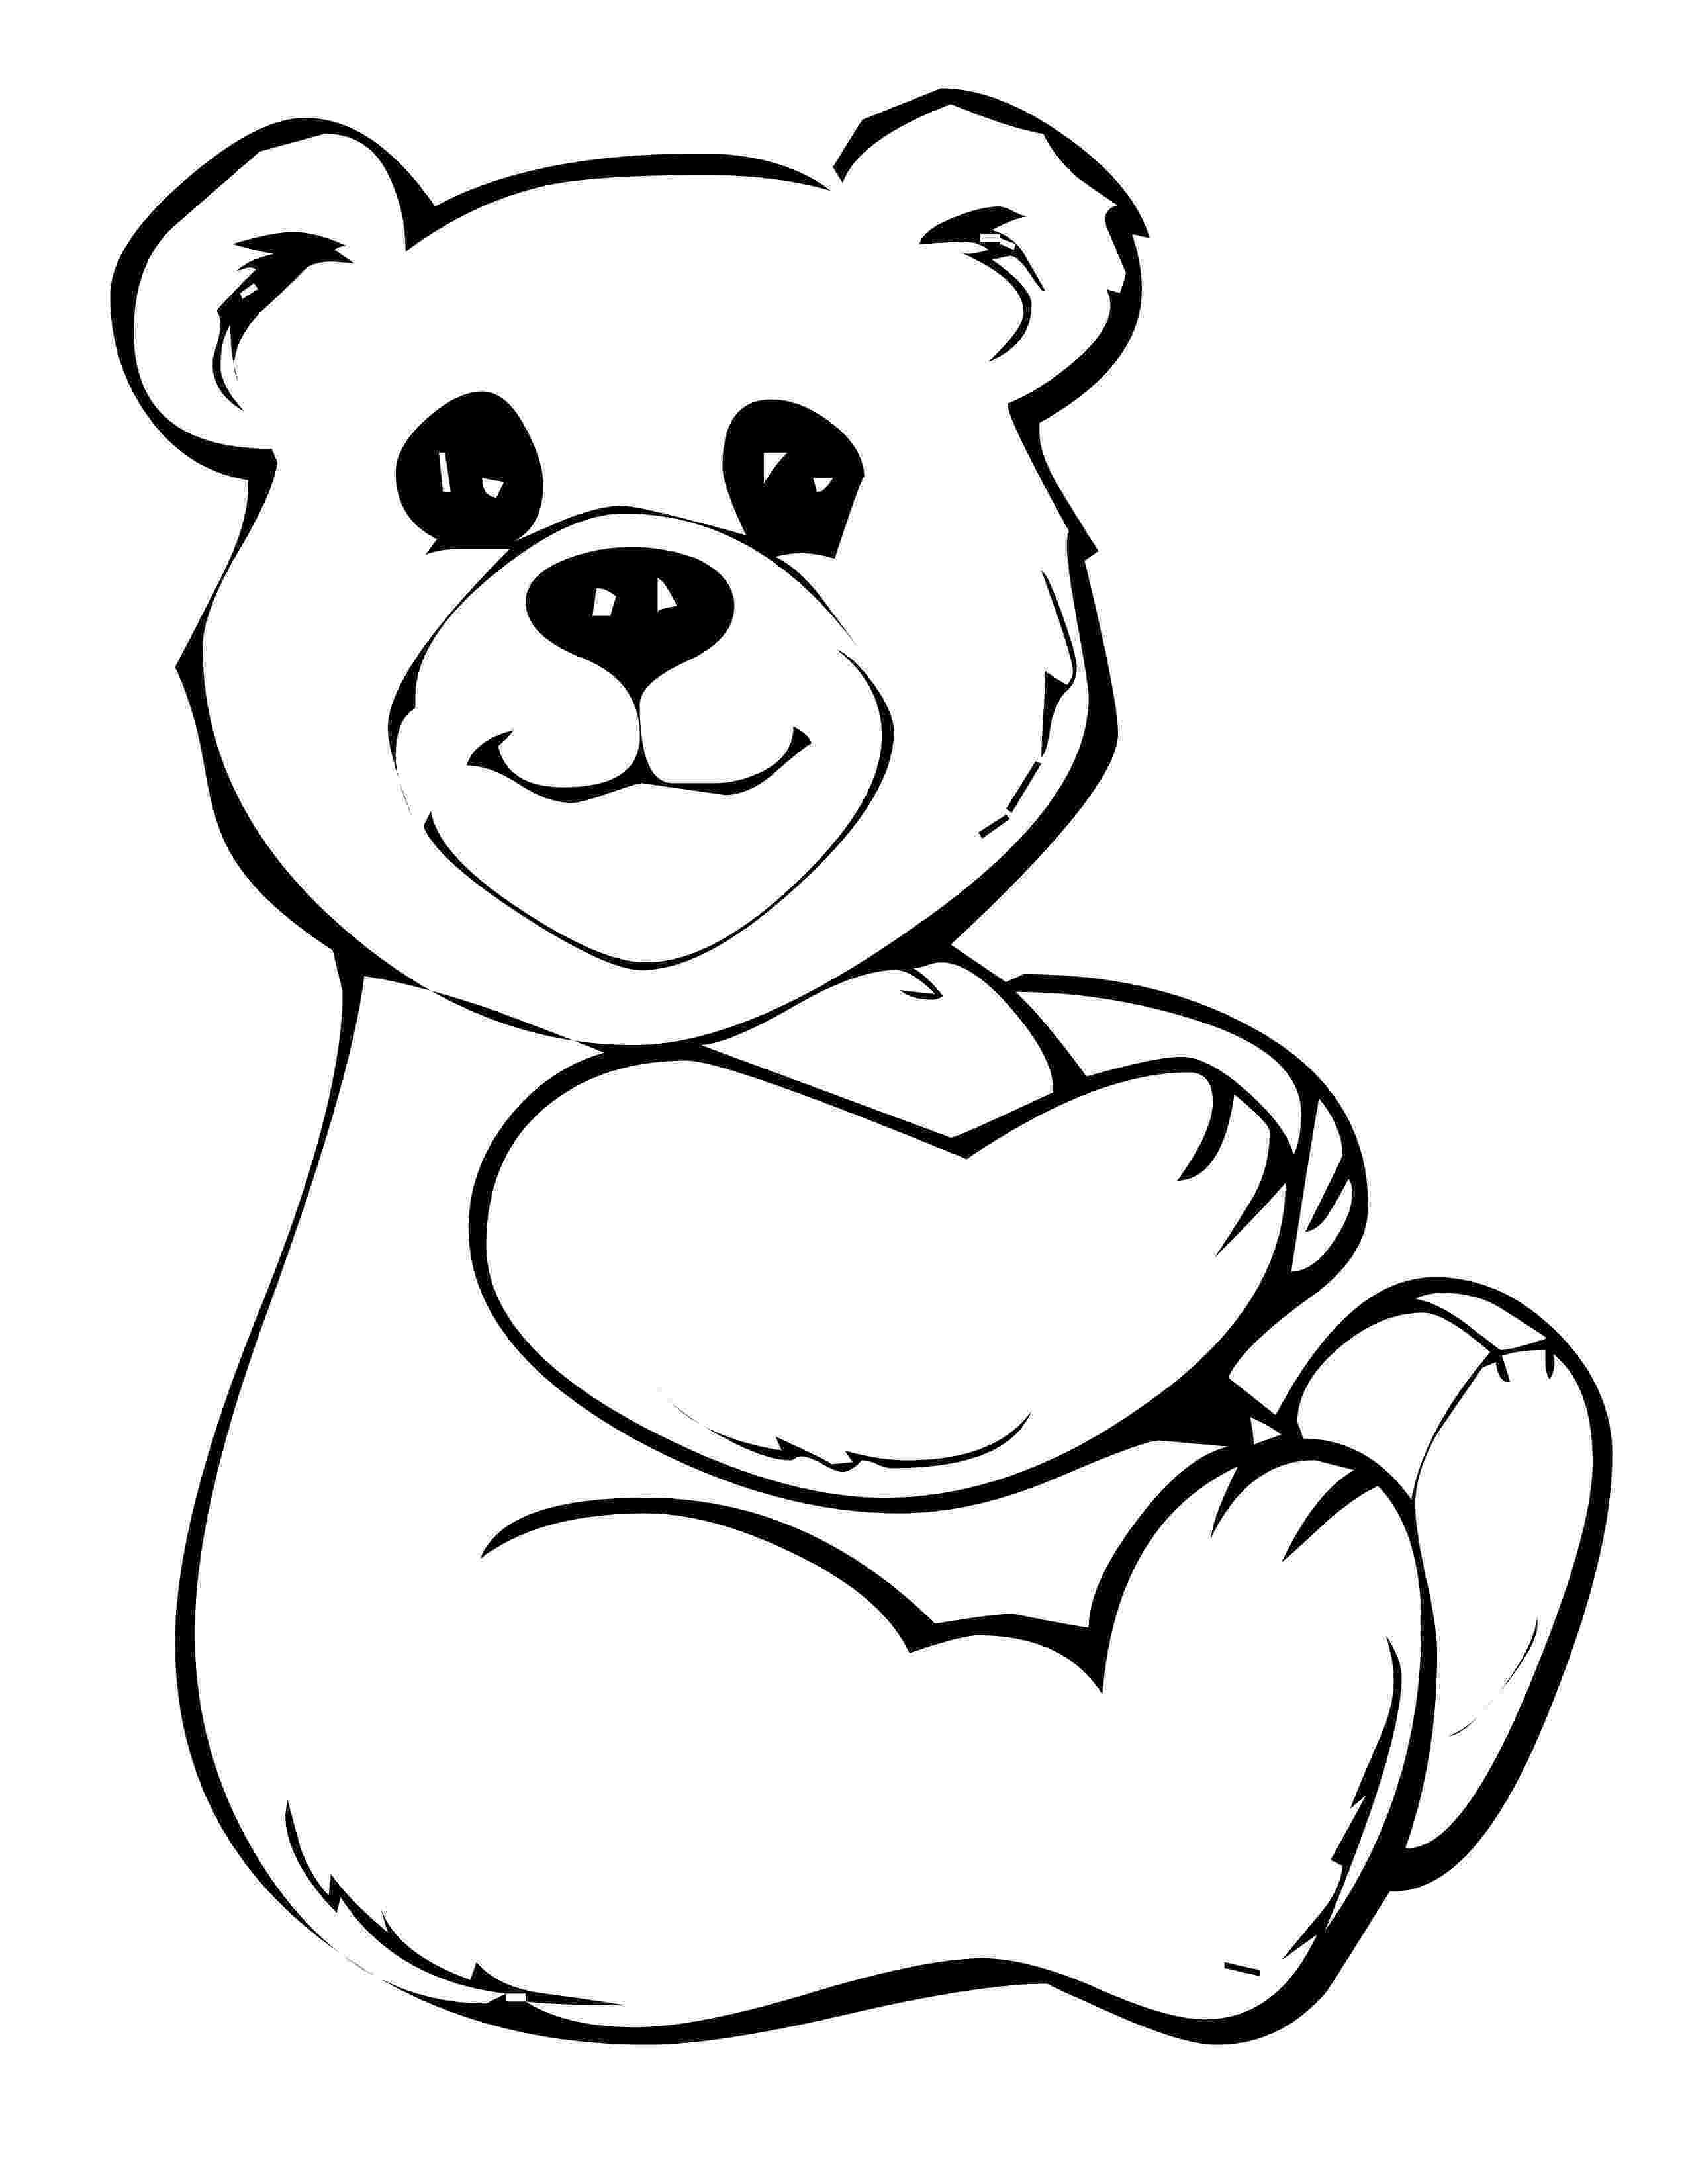 coloring sheet teddy bear printable teddy bear coloring pages for kids cool2bkids teddy bear coloring sheet 